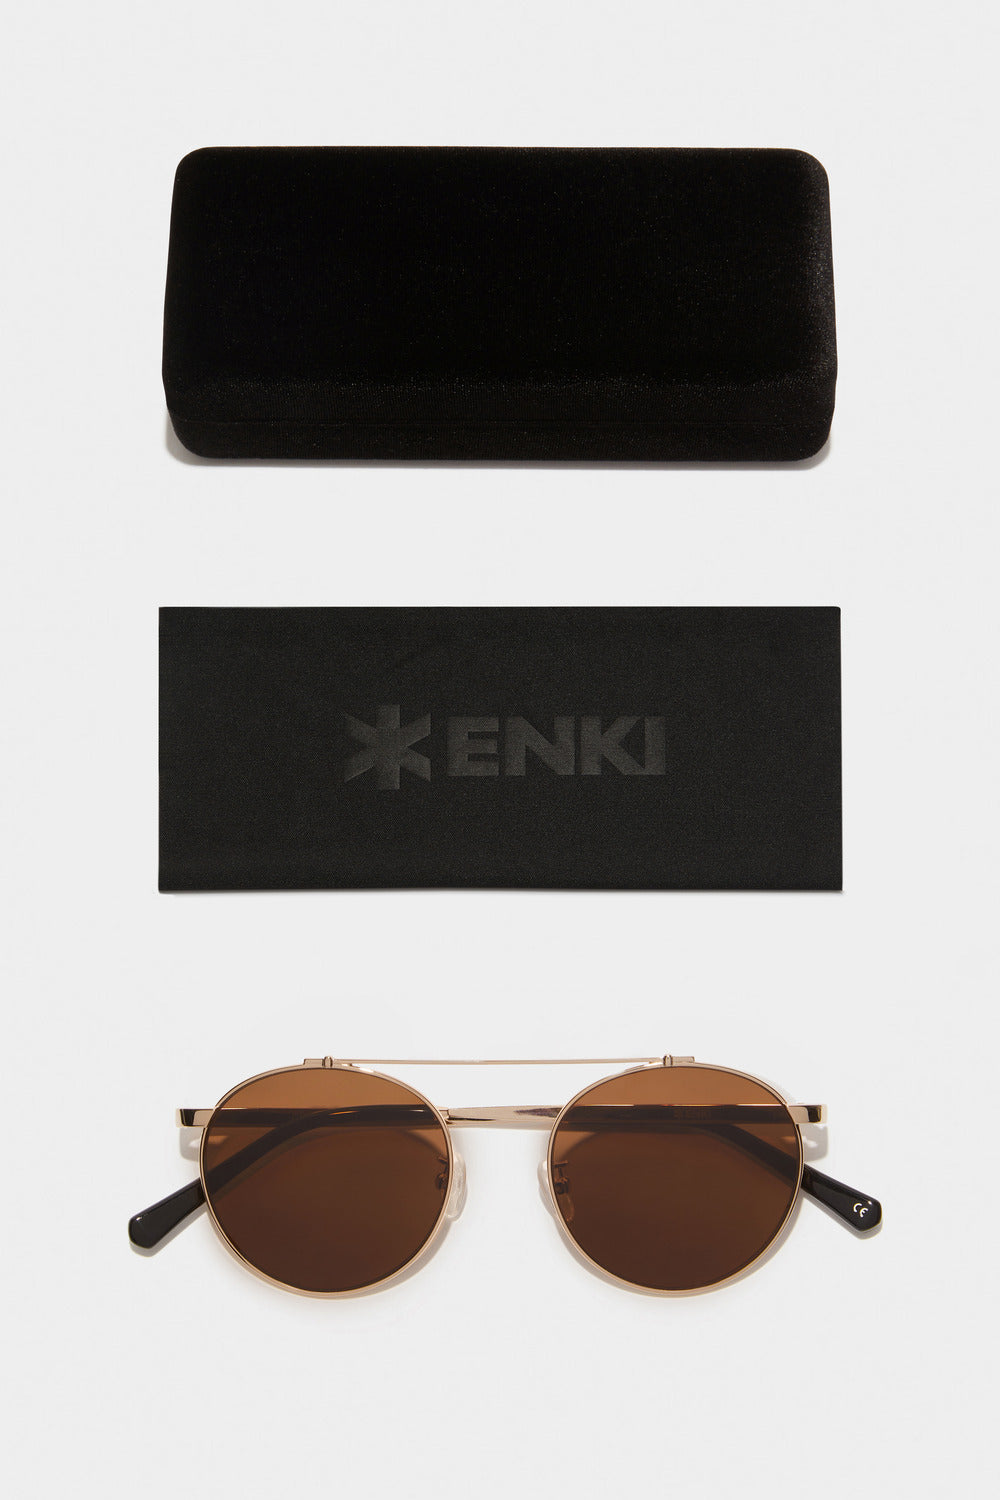 www.enkieyewear.com Crinis Men’s and Women’s Sunglasses